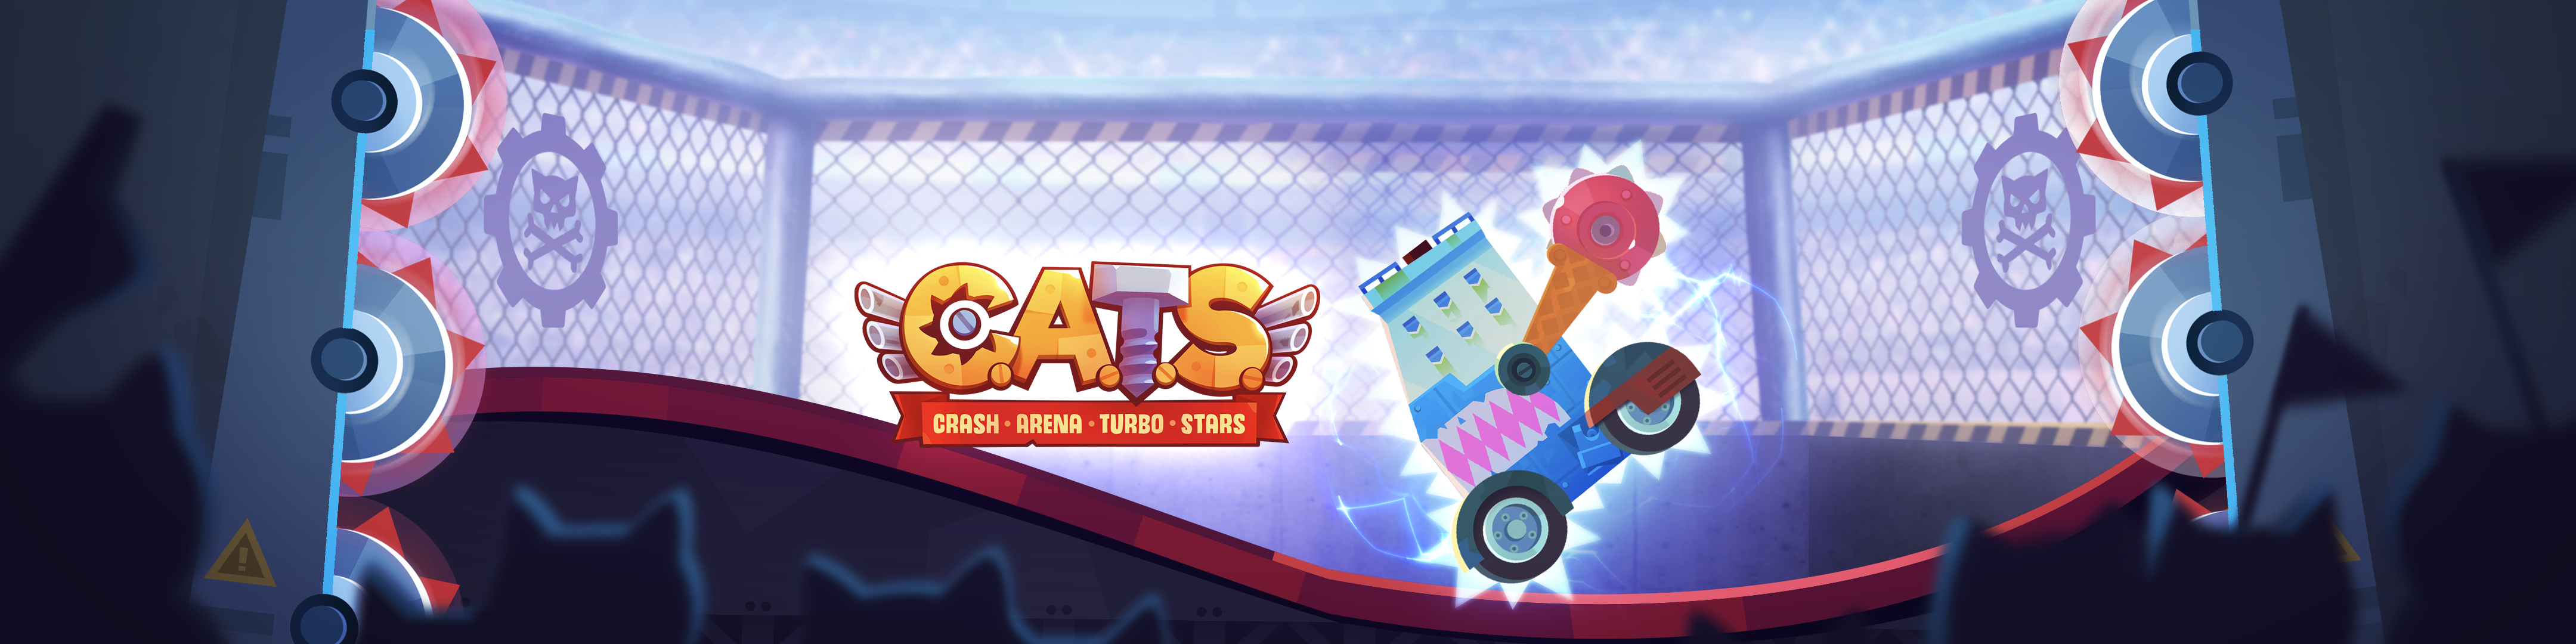 Cats Crash Arena Turbo Stars Overview Apple App Store Great Britain - doom bucket roblox free roblox app